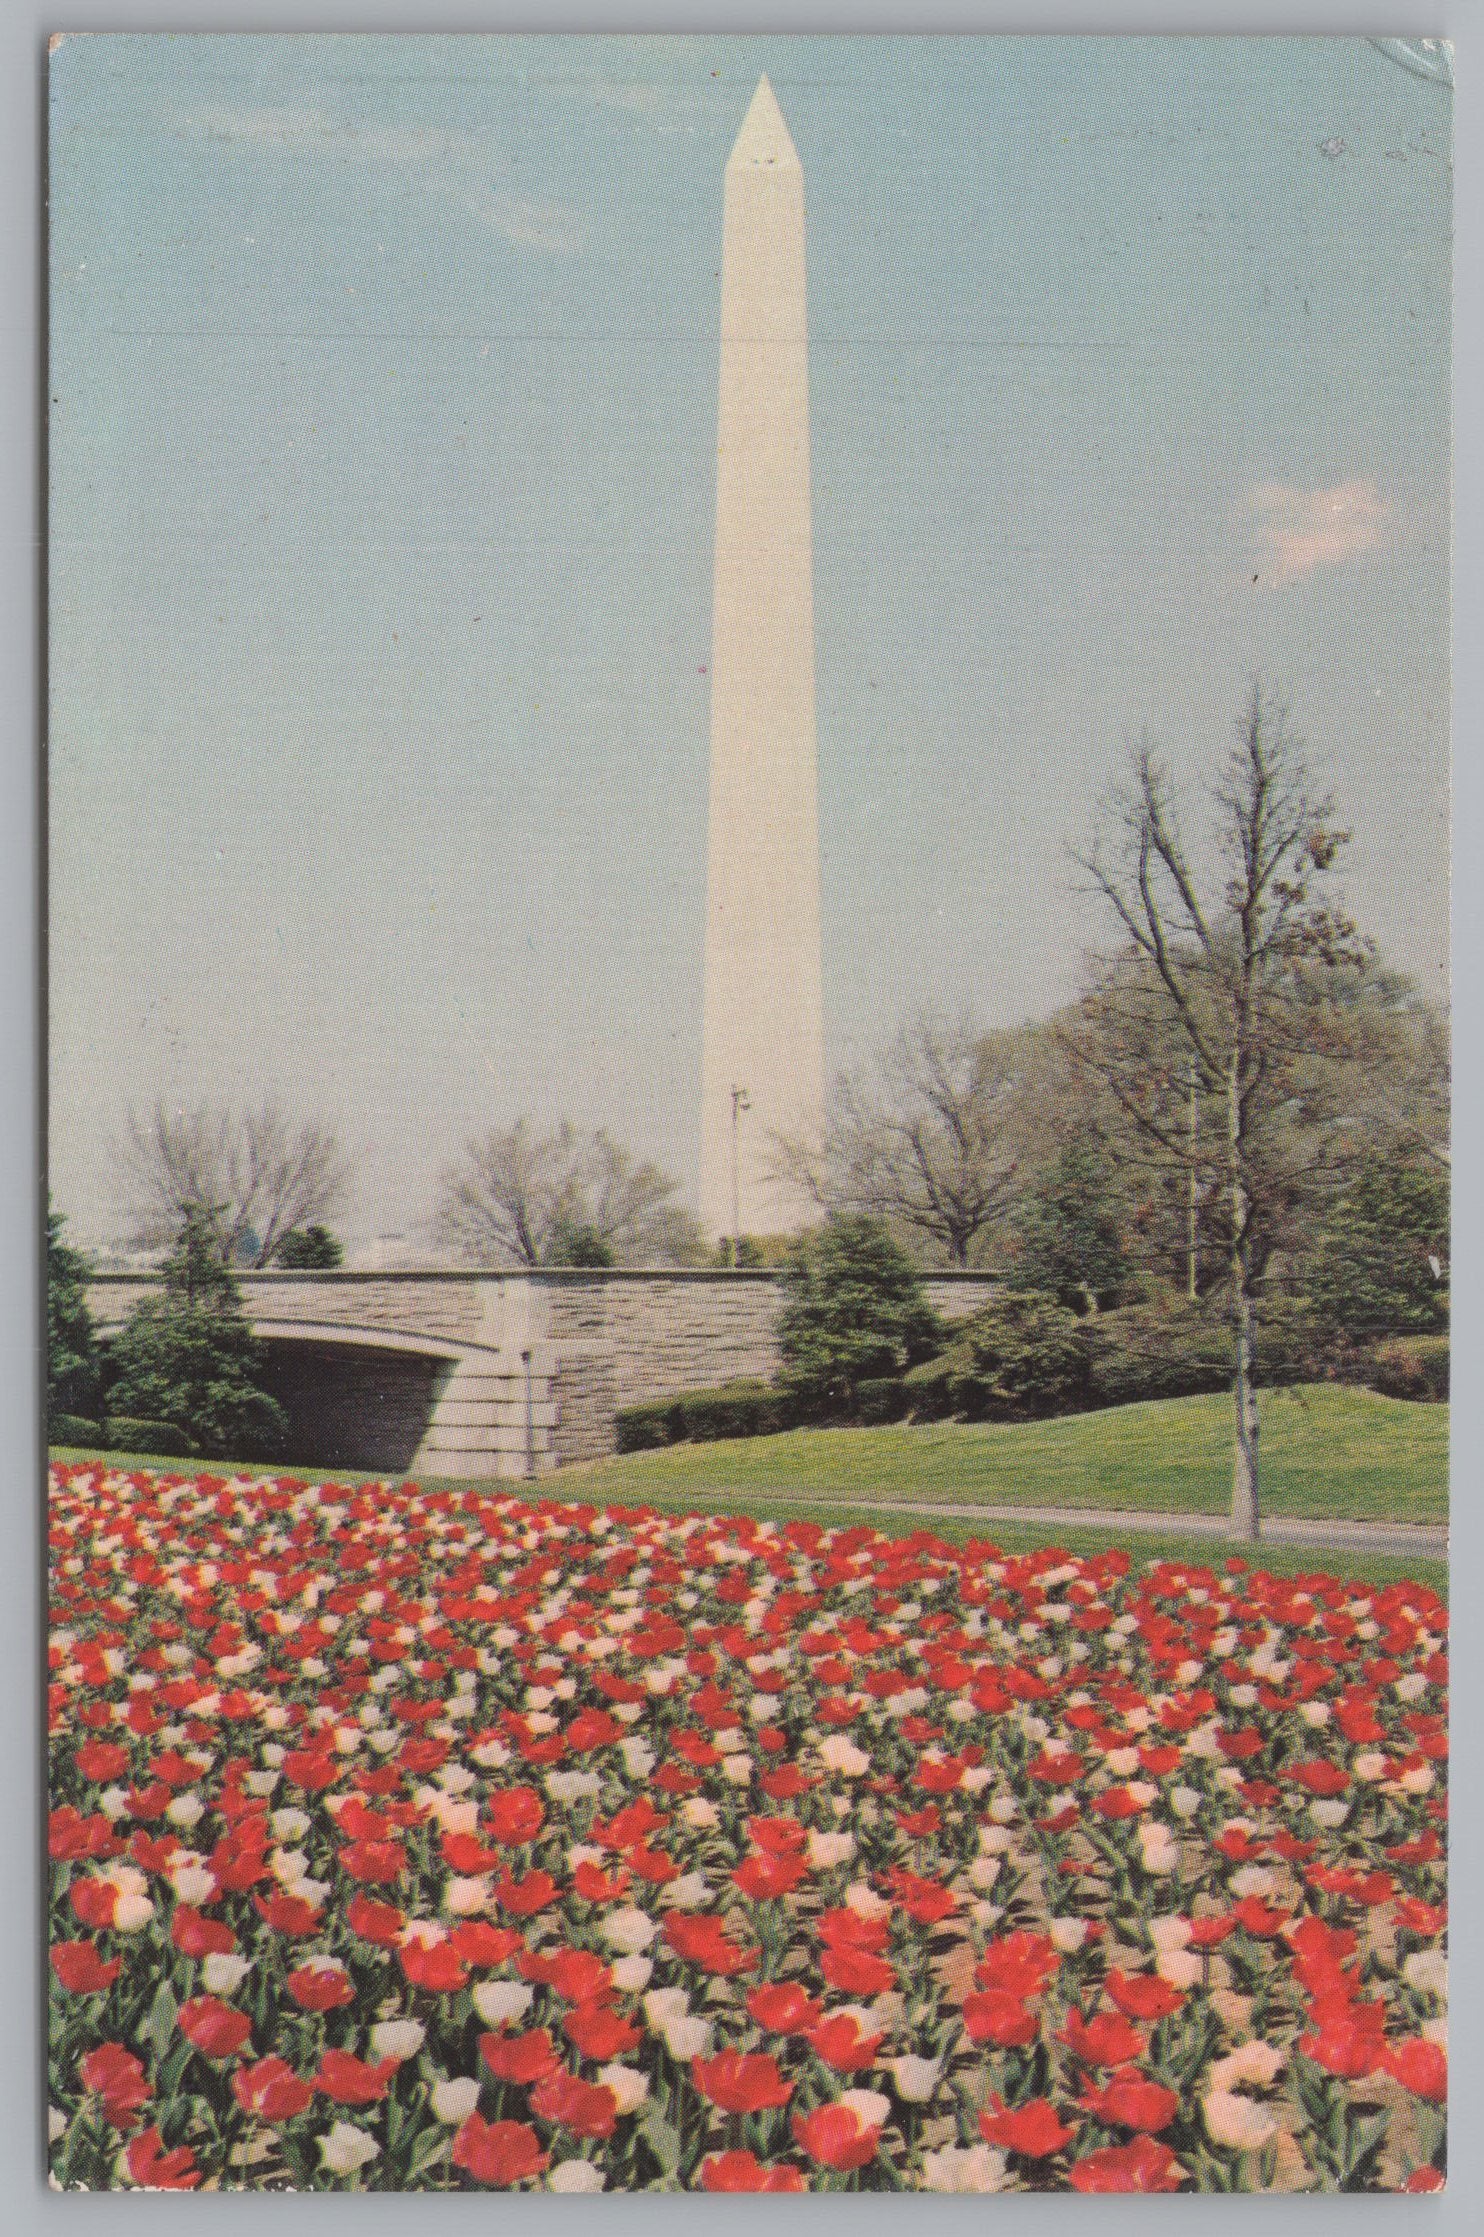 Washington Monument From A Distance, Washington DC, Vintage Post Card.